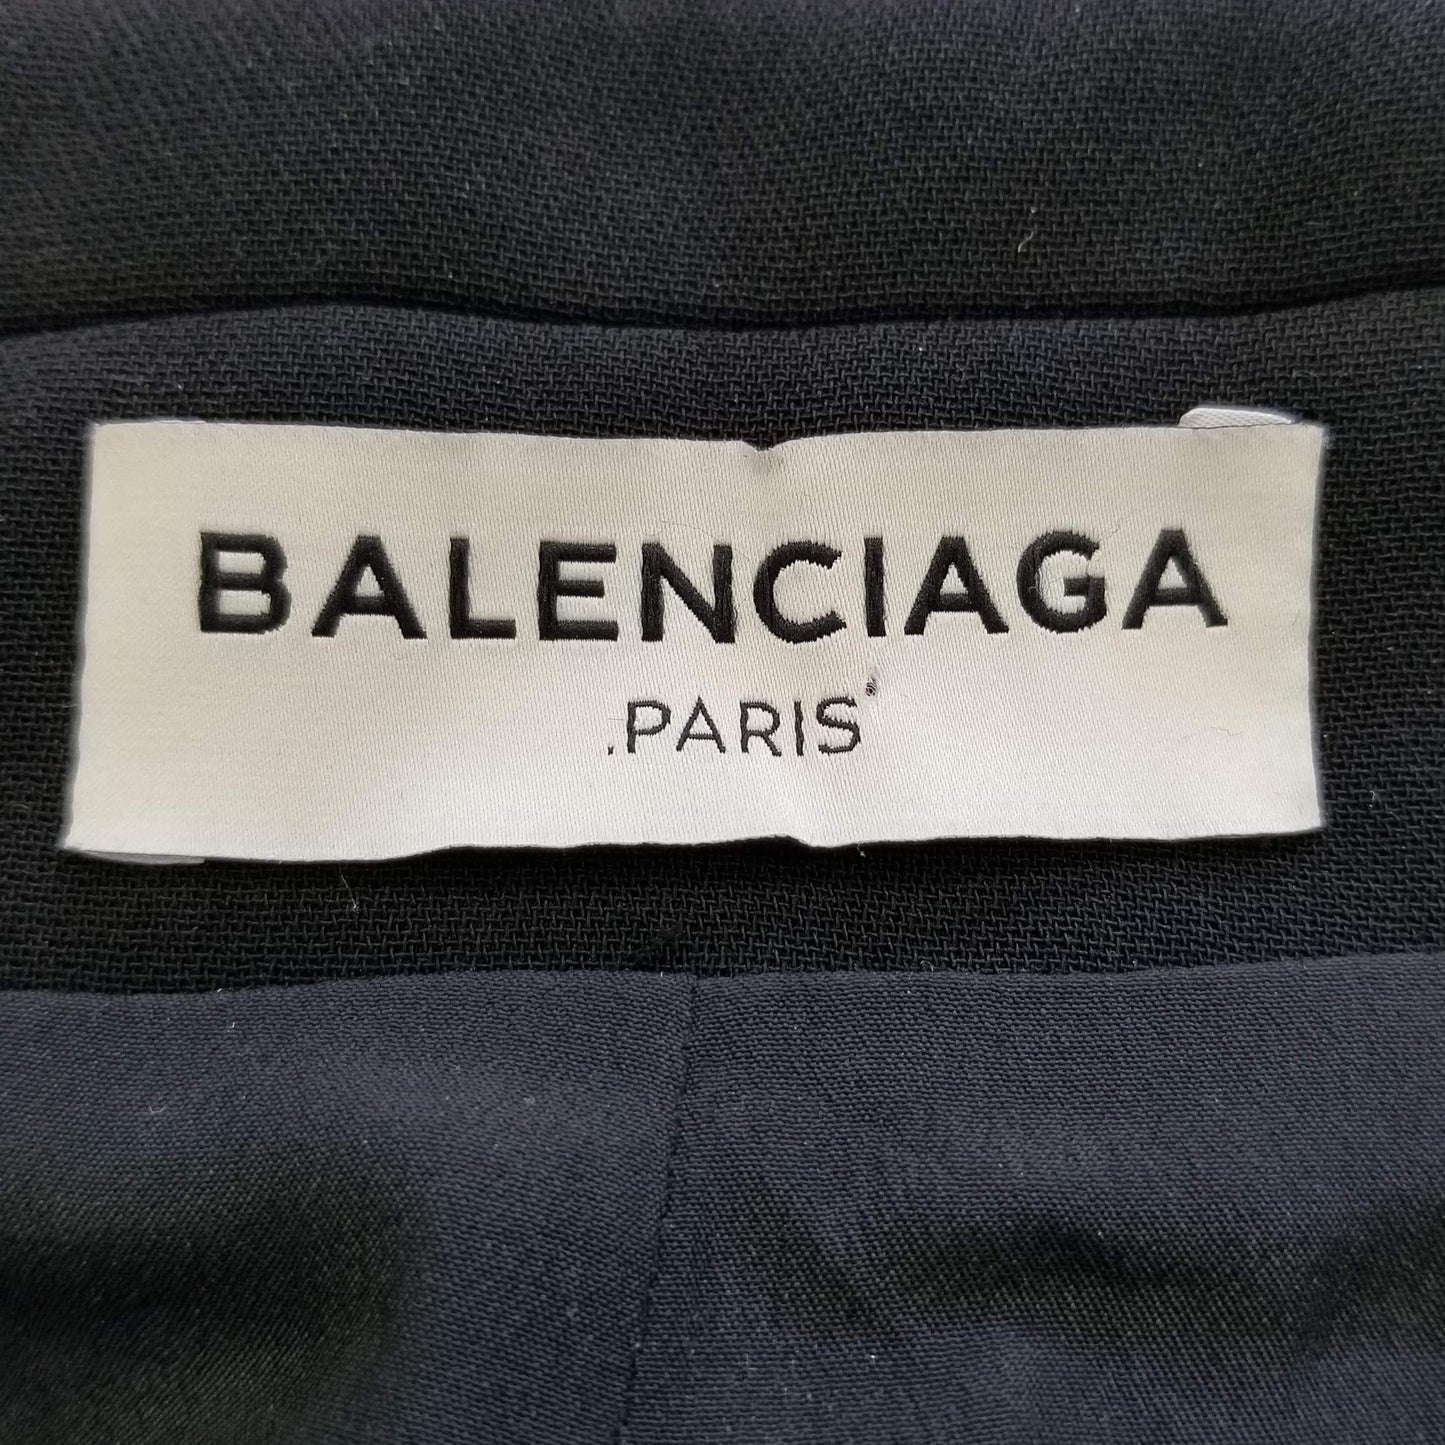 Authentic Balenciaga Black Moto Jacket Sz XS/S